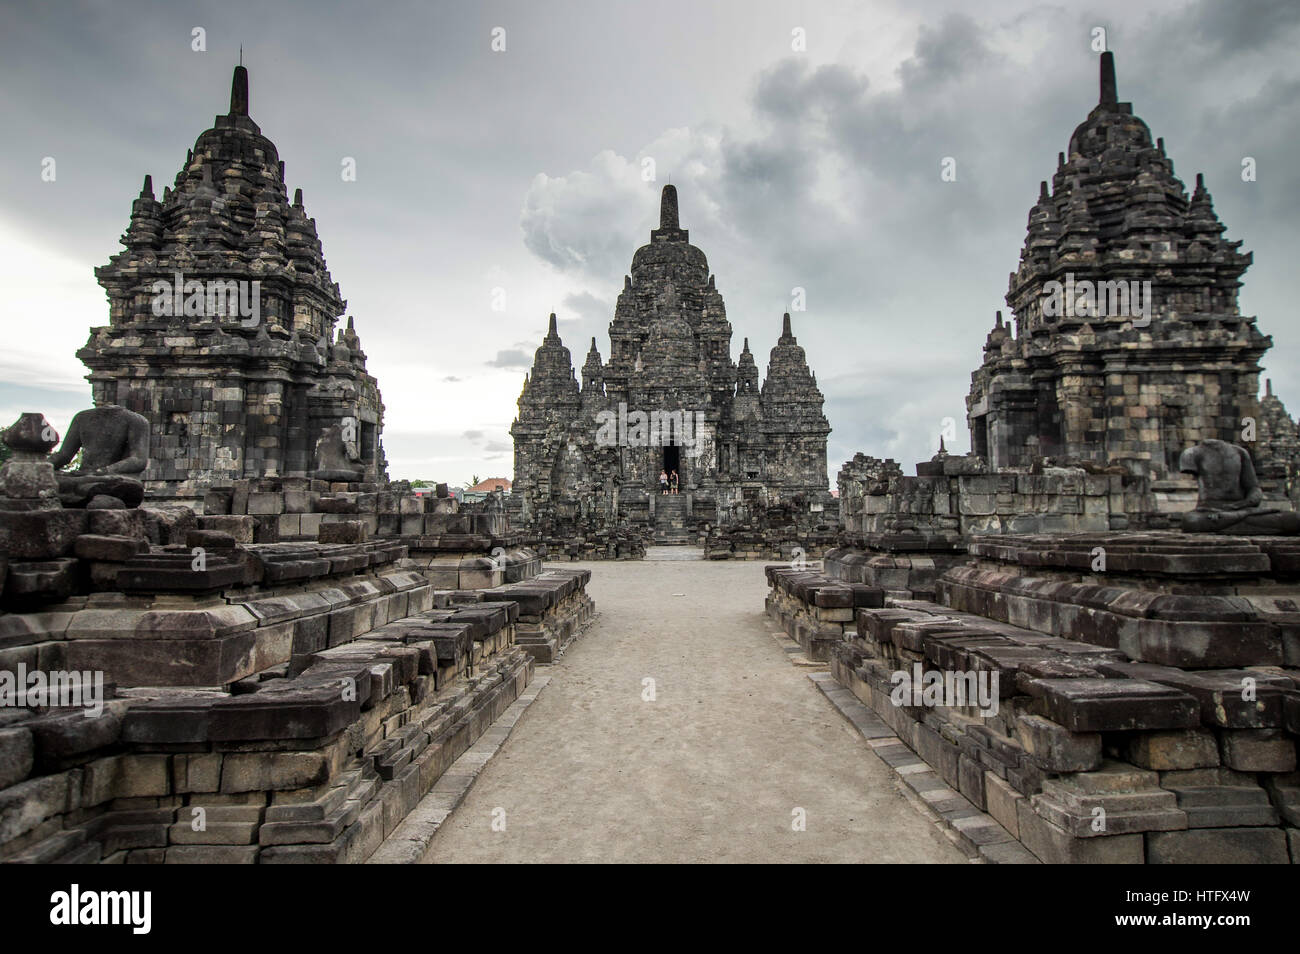 Sewu Mahayana Buddhist temple complex located near Prambanan in Central Java, Indonesia Stock Photo